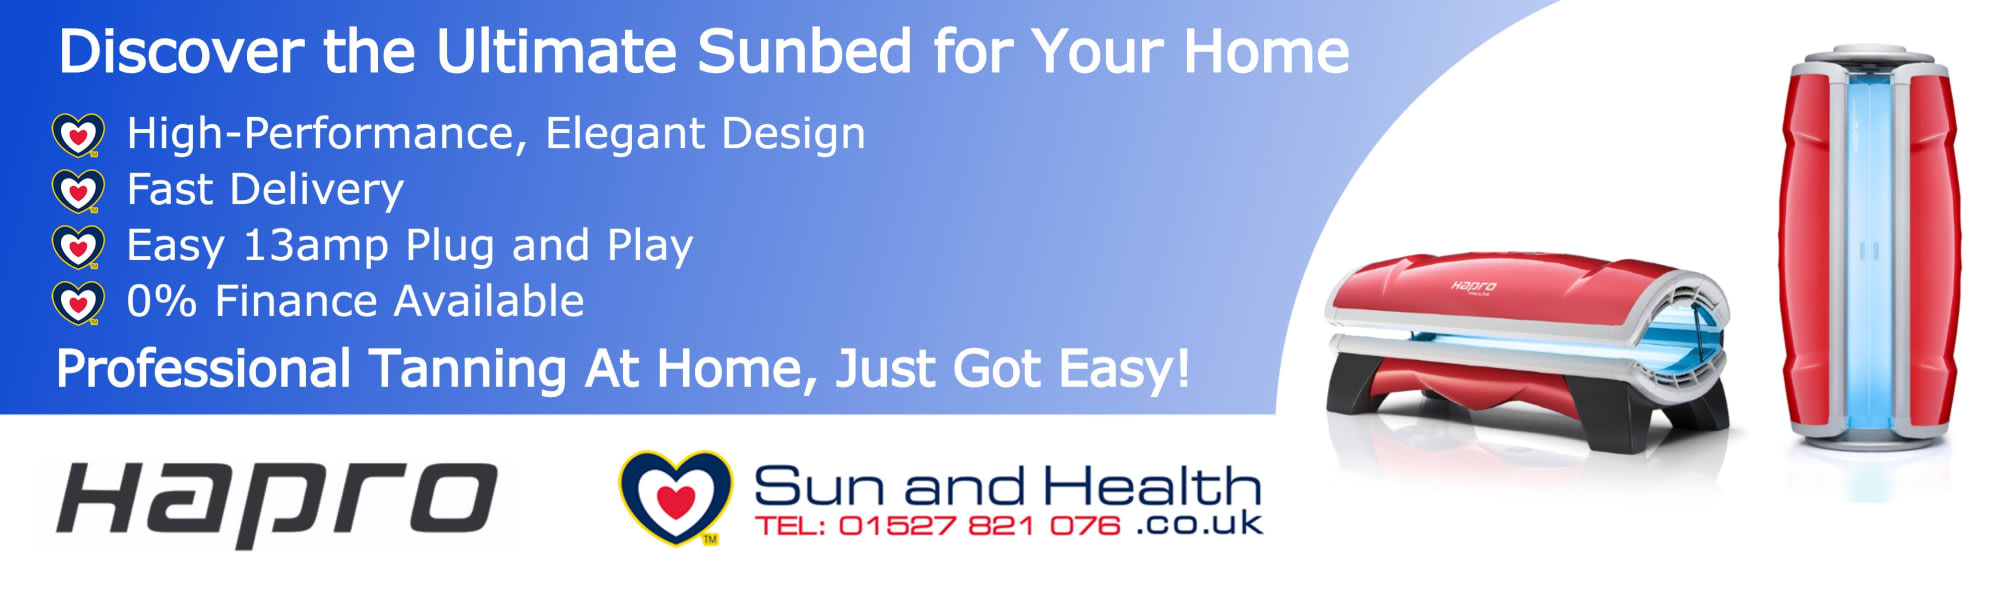 Sun and Health International Ltd Droitwich 01527 821076